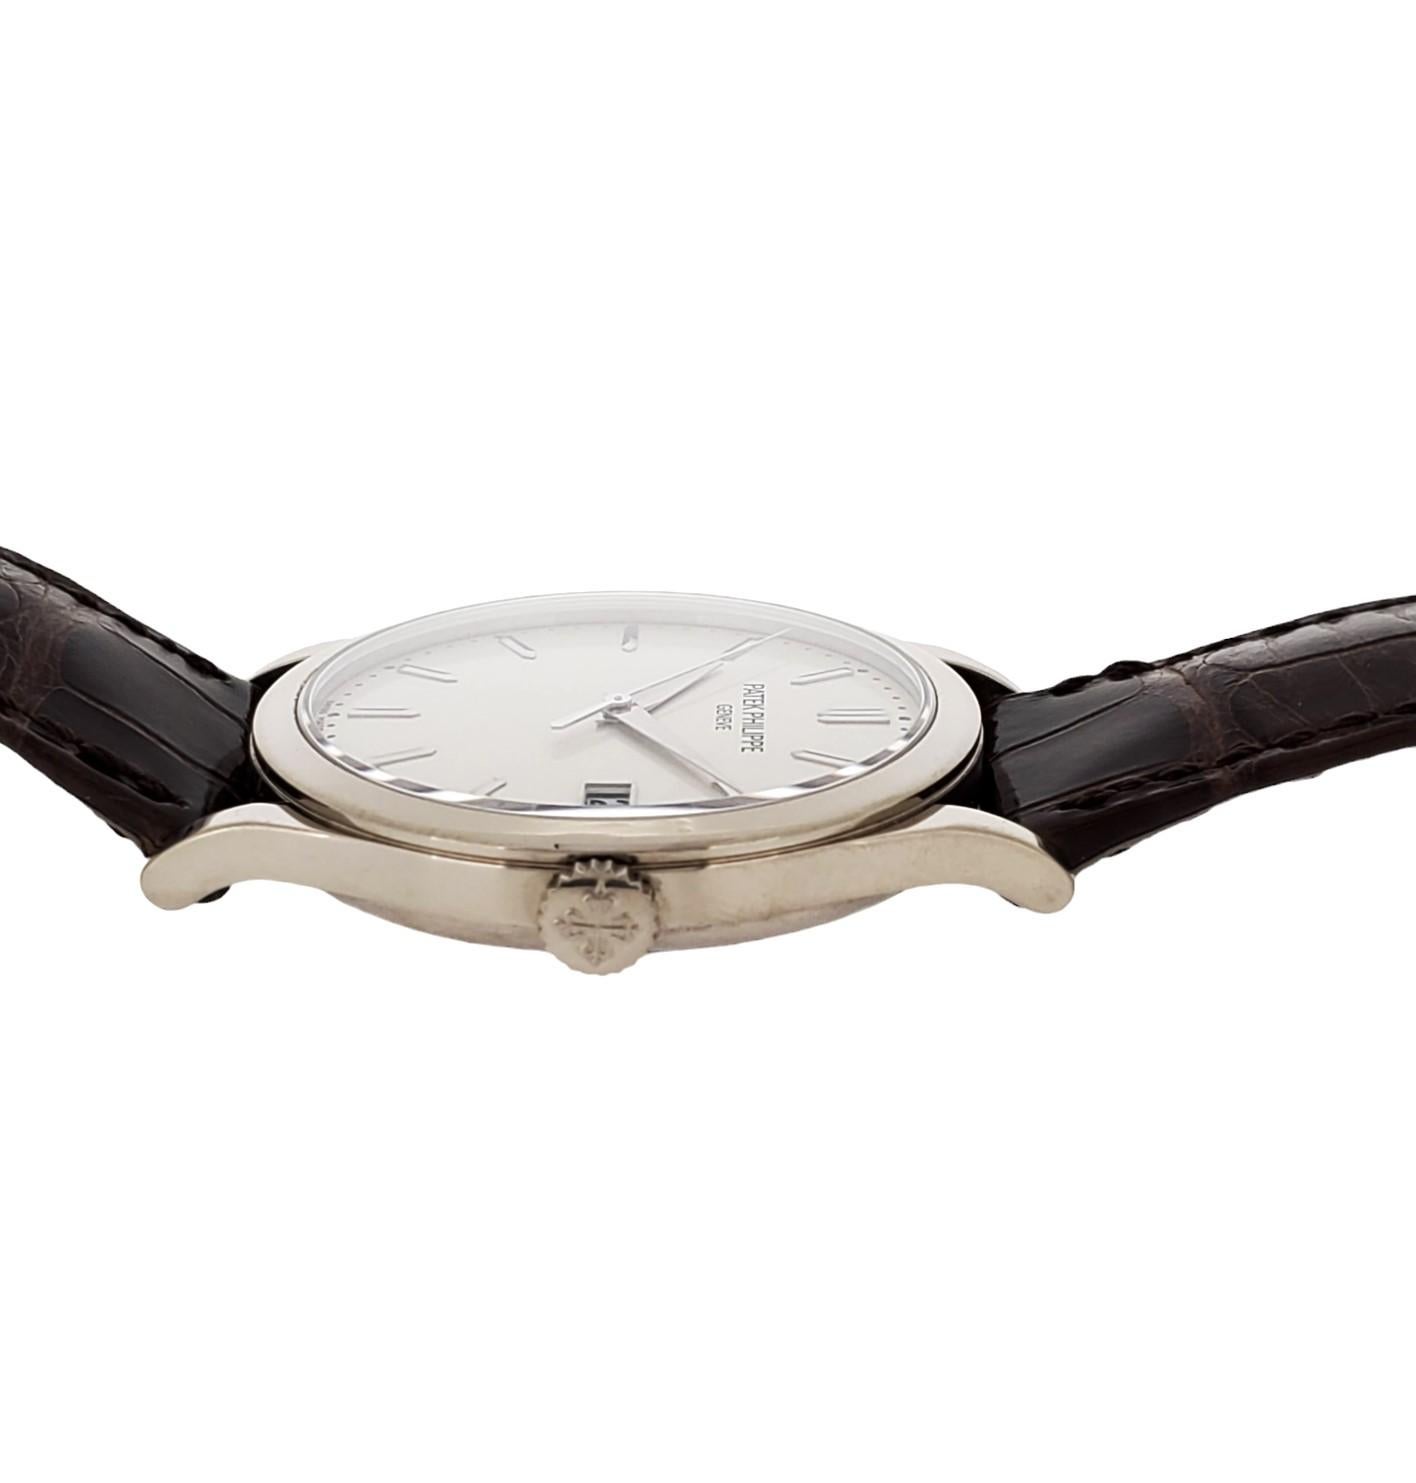 Patek Philippe 5296G-010; Automatic Calatrava watch,  38mm Circa 2015 For Sale 2